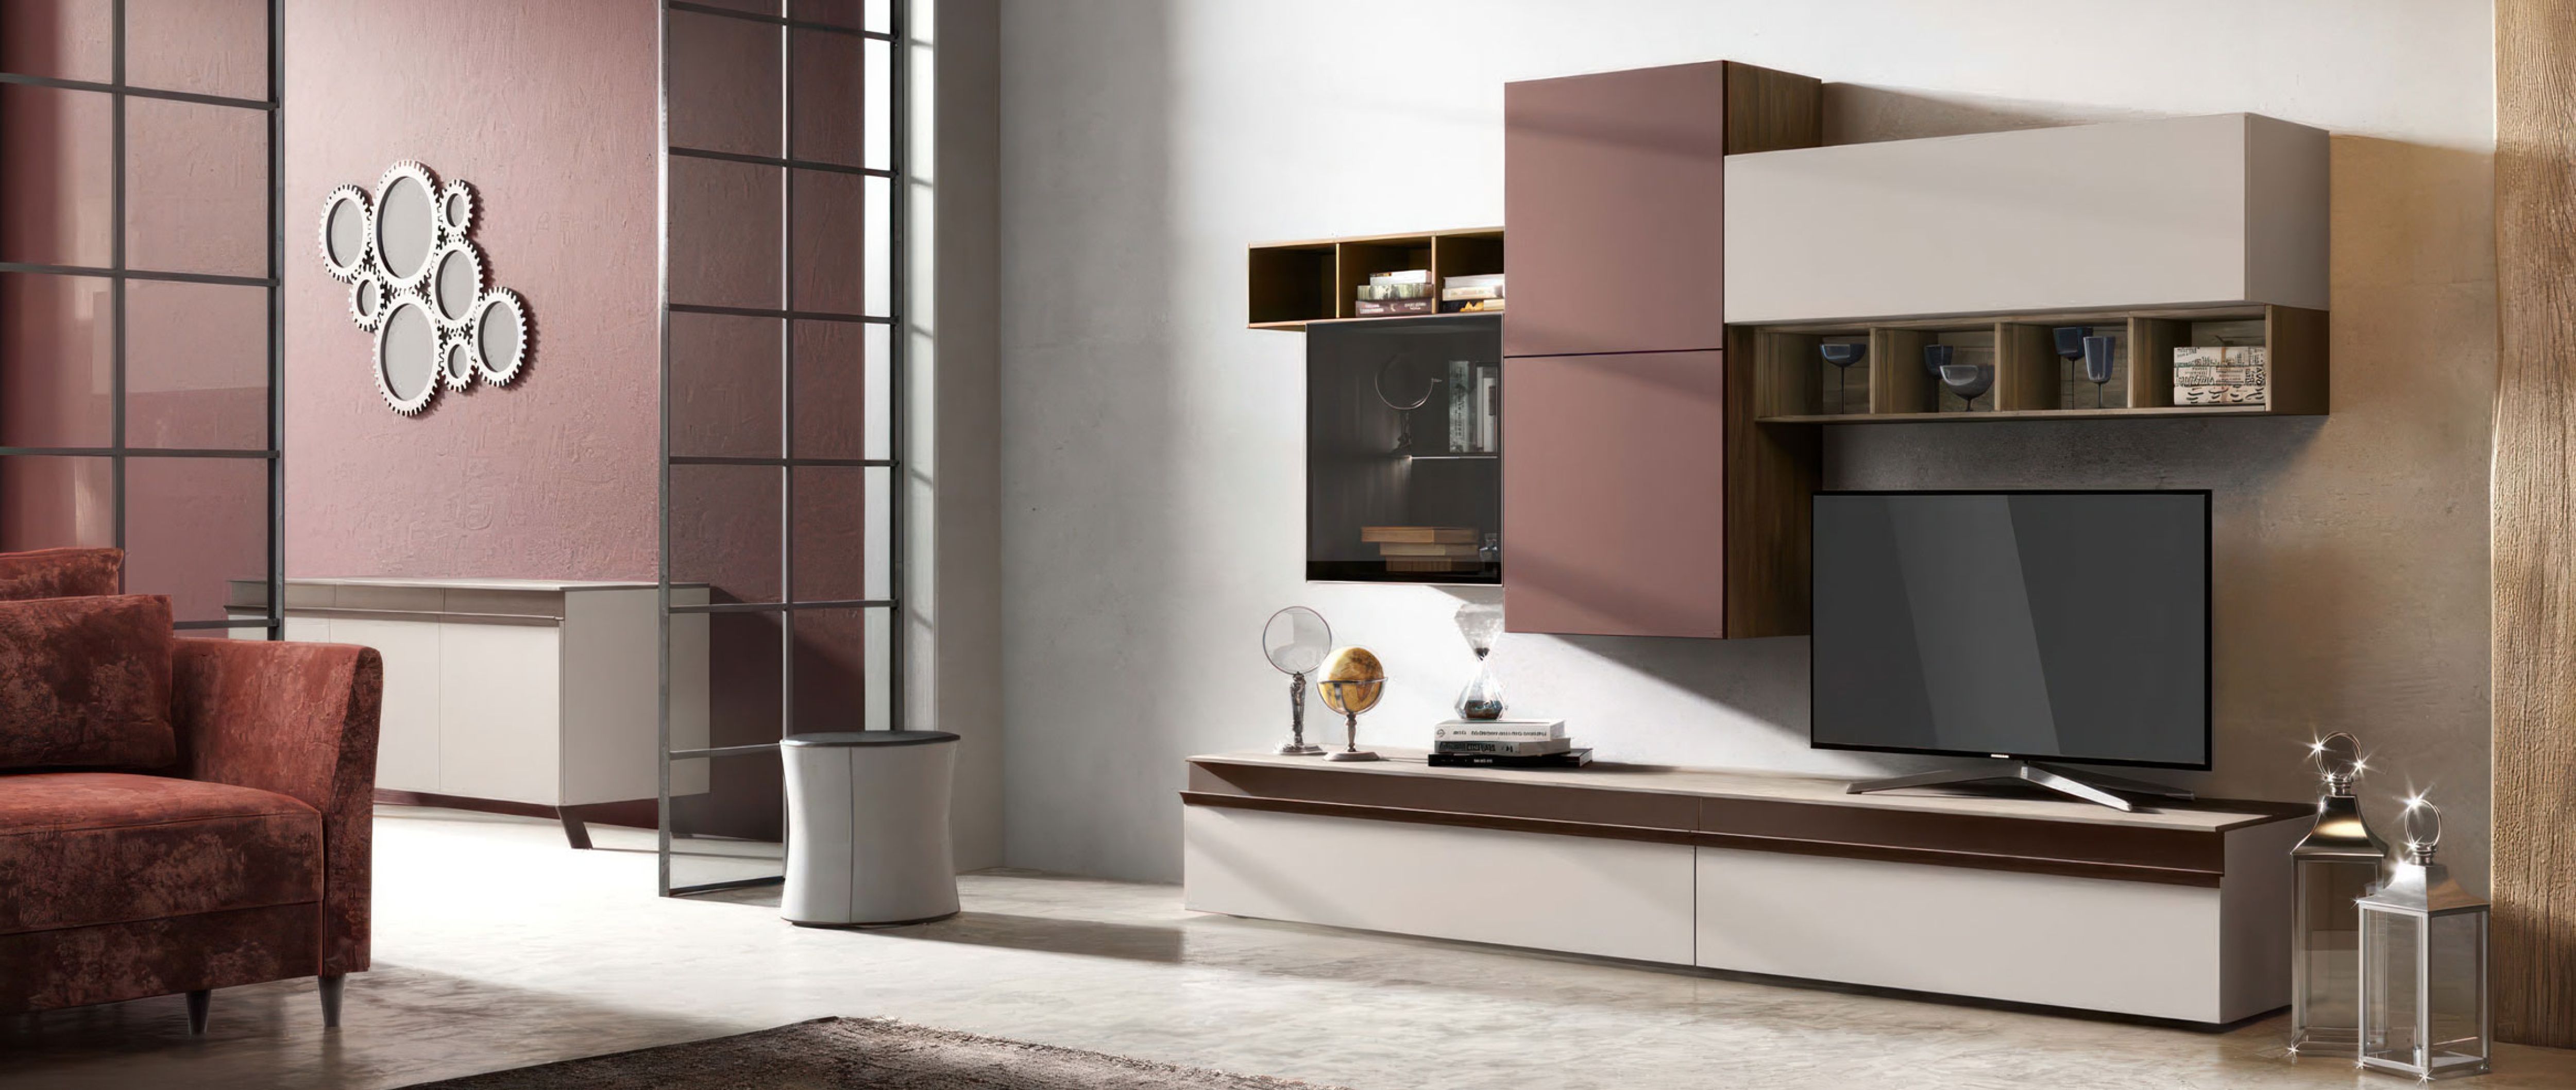 Rossini Cucine Living Collection - Living Spaces Italian Furniture